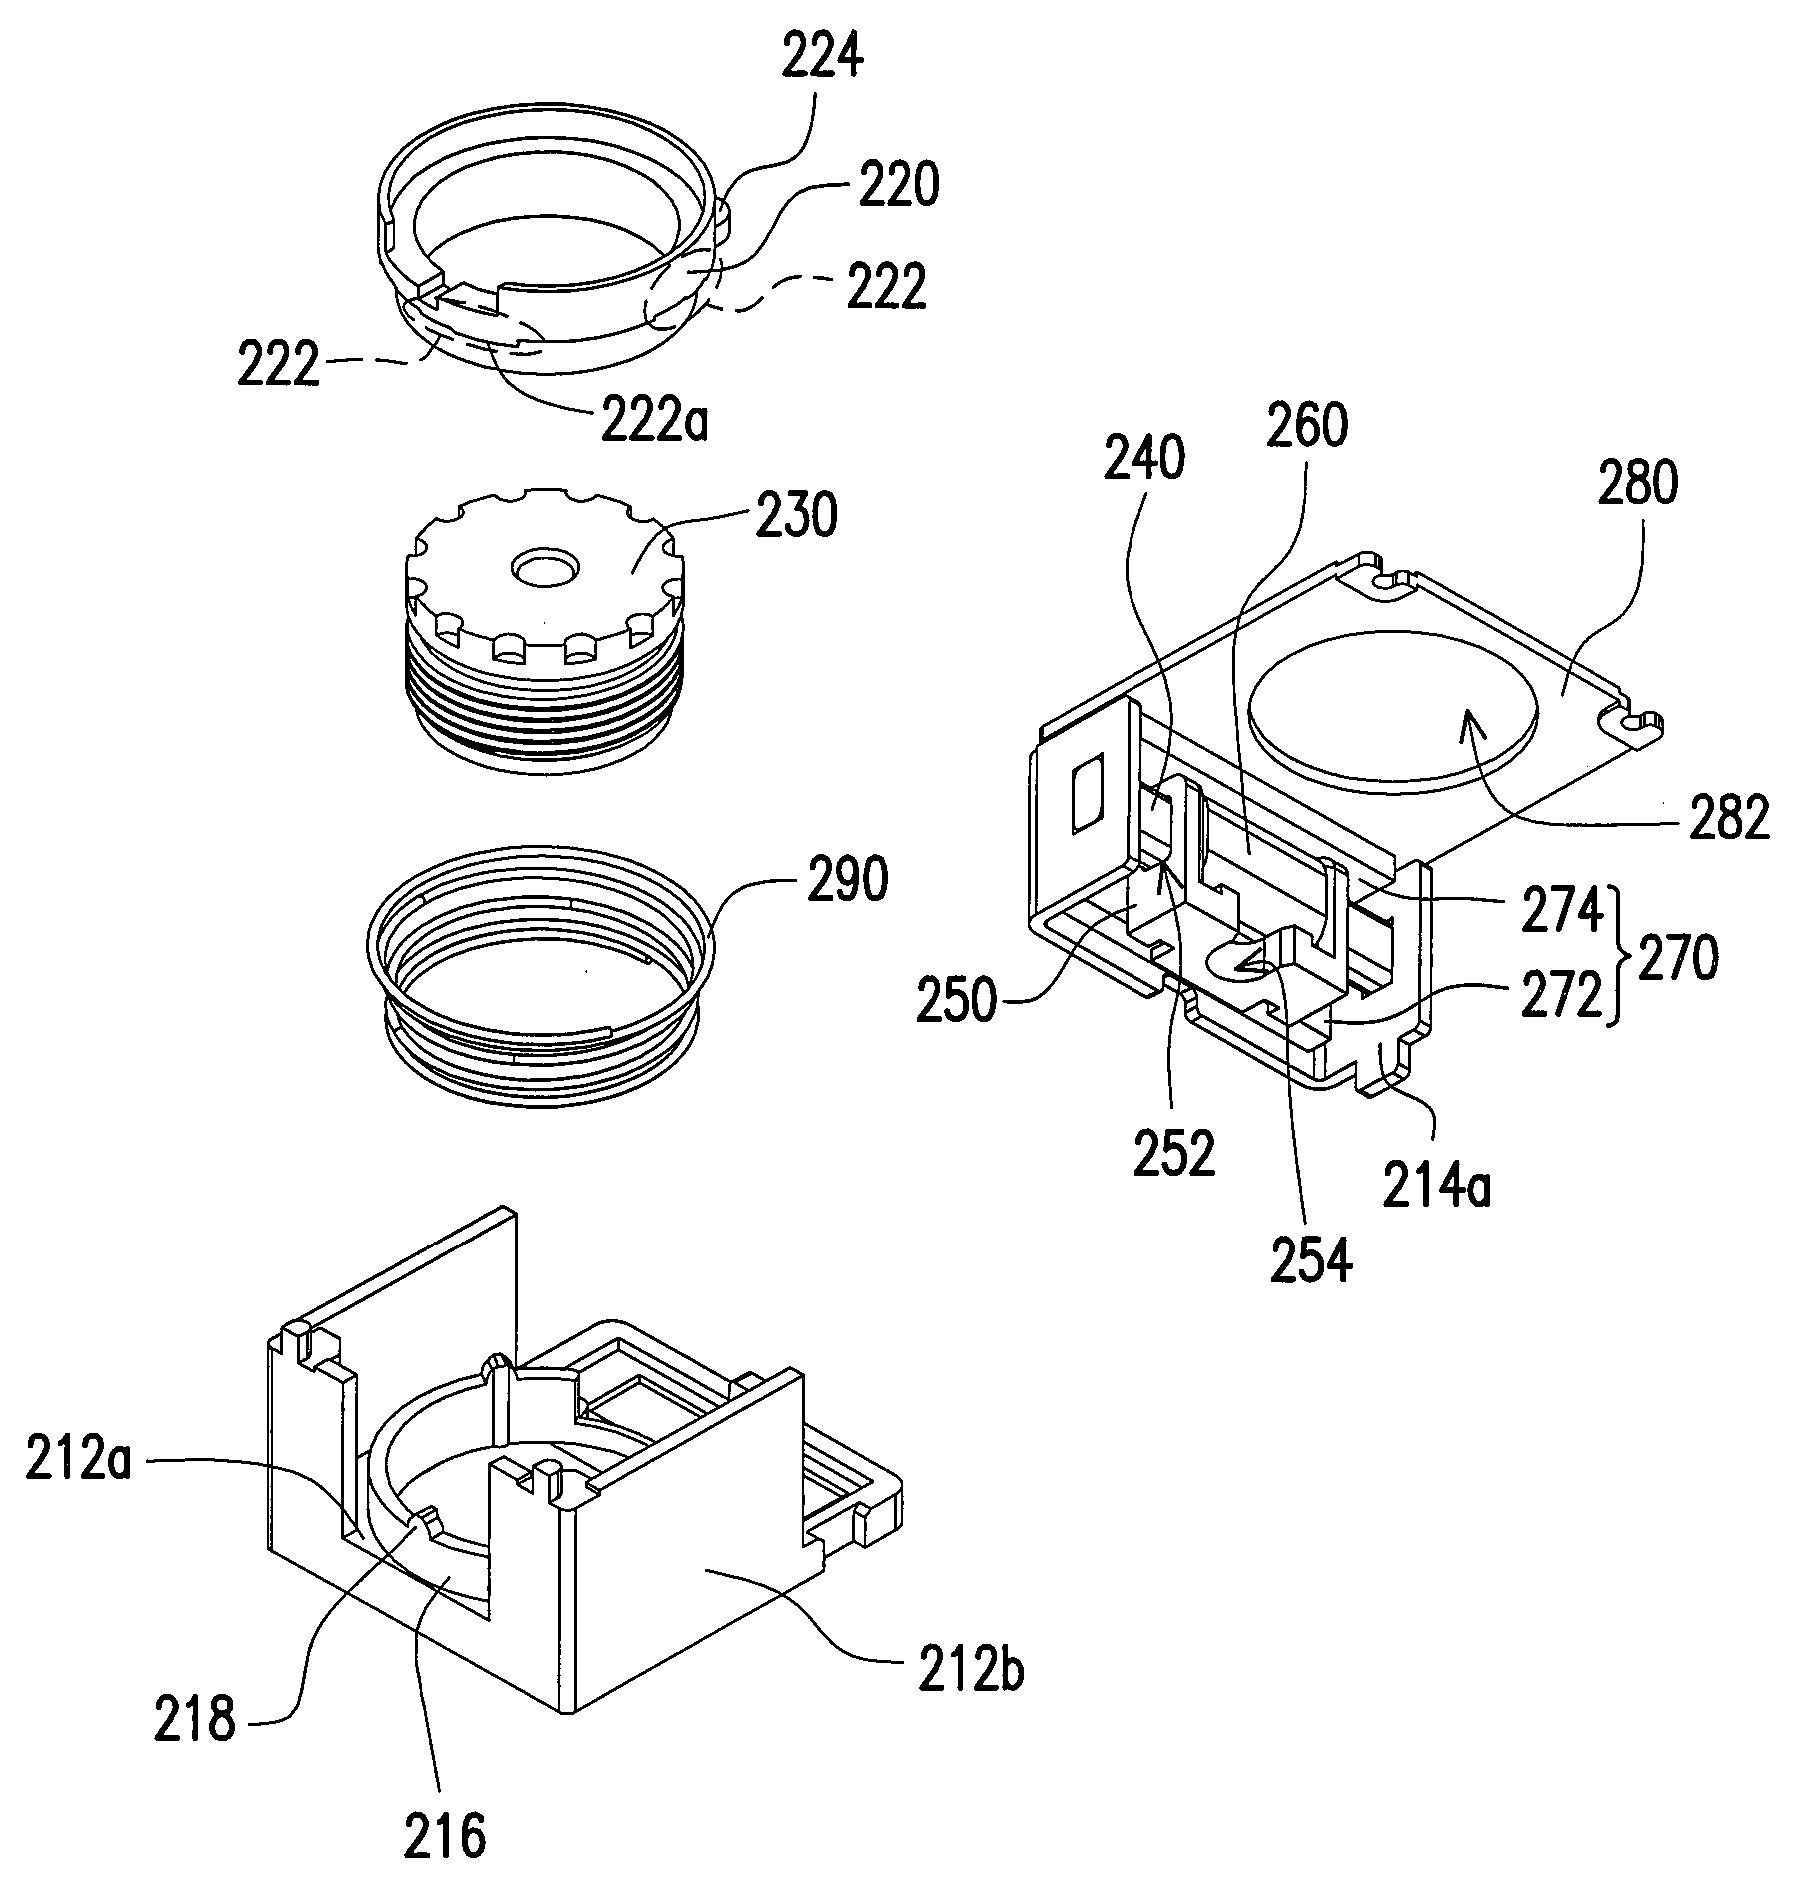 Lens module